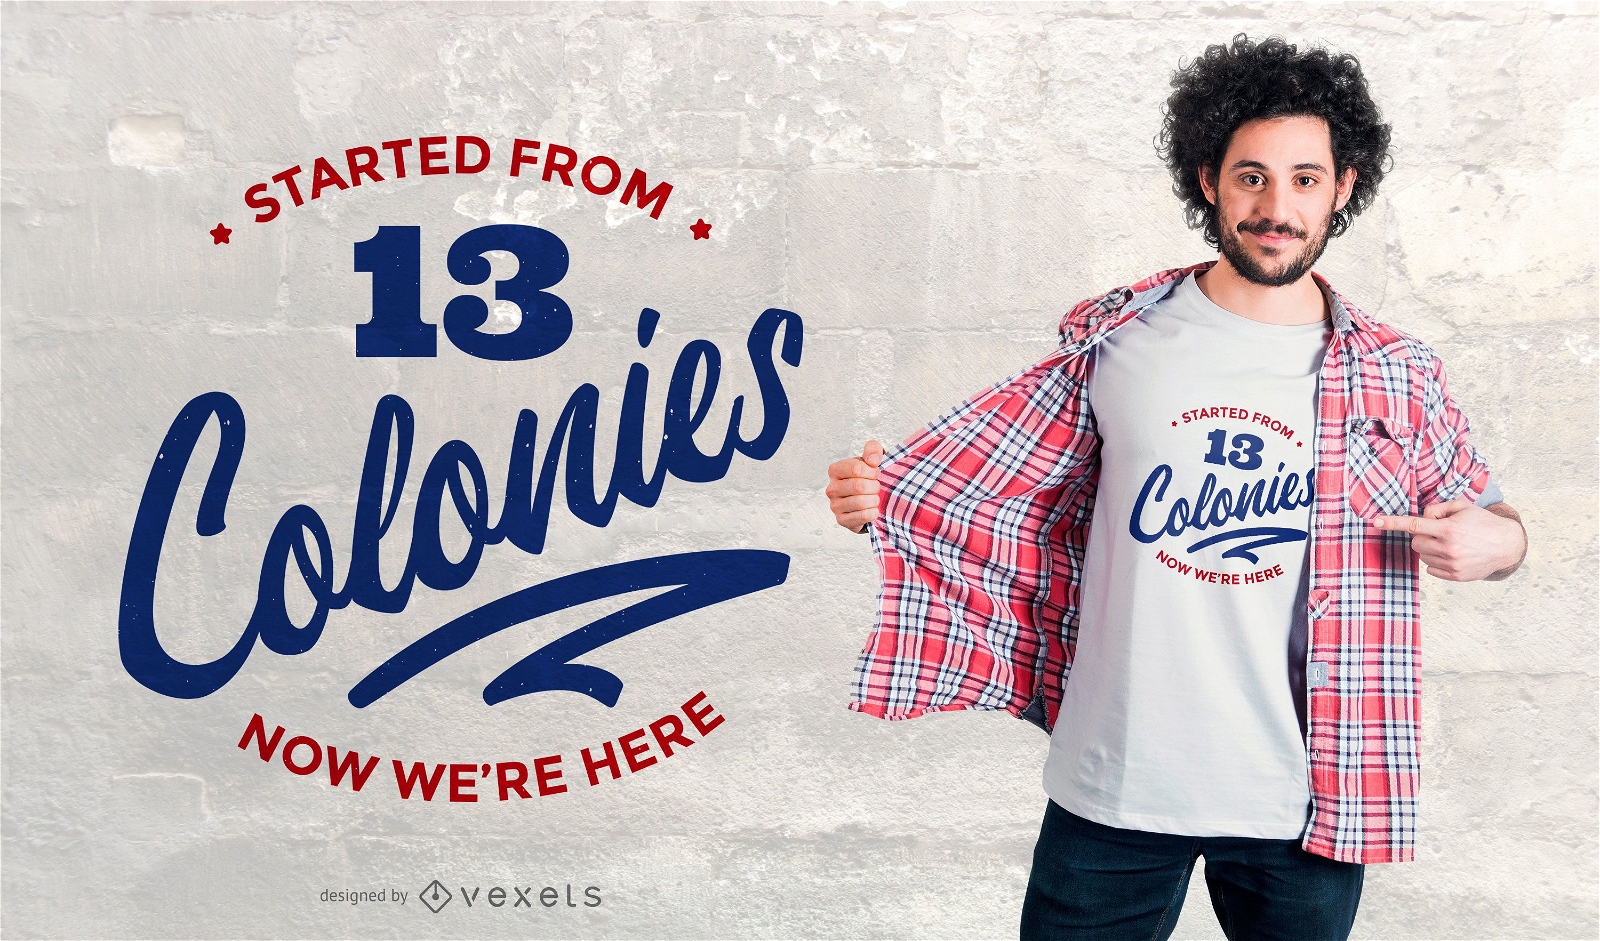 colonies t-shirt design